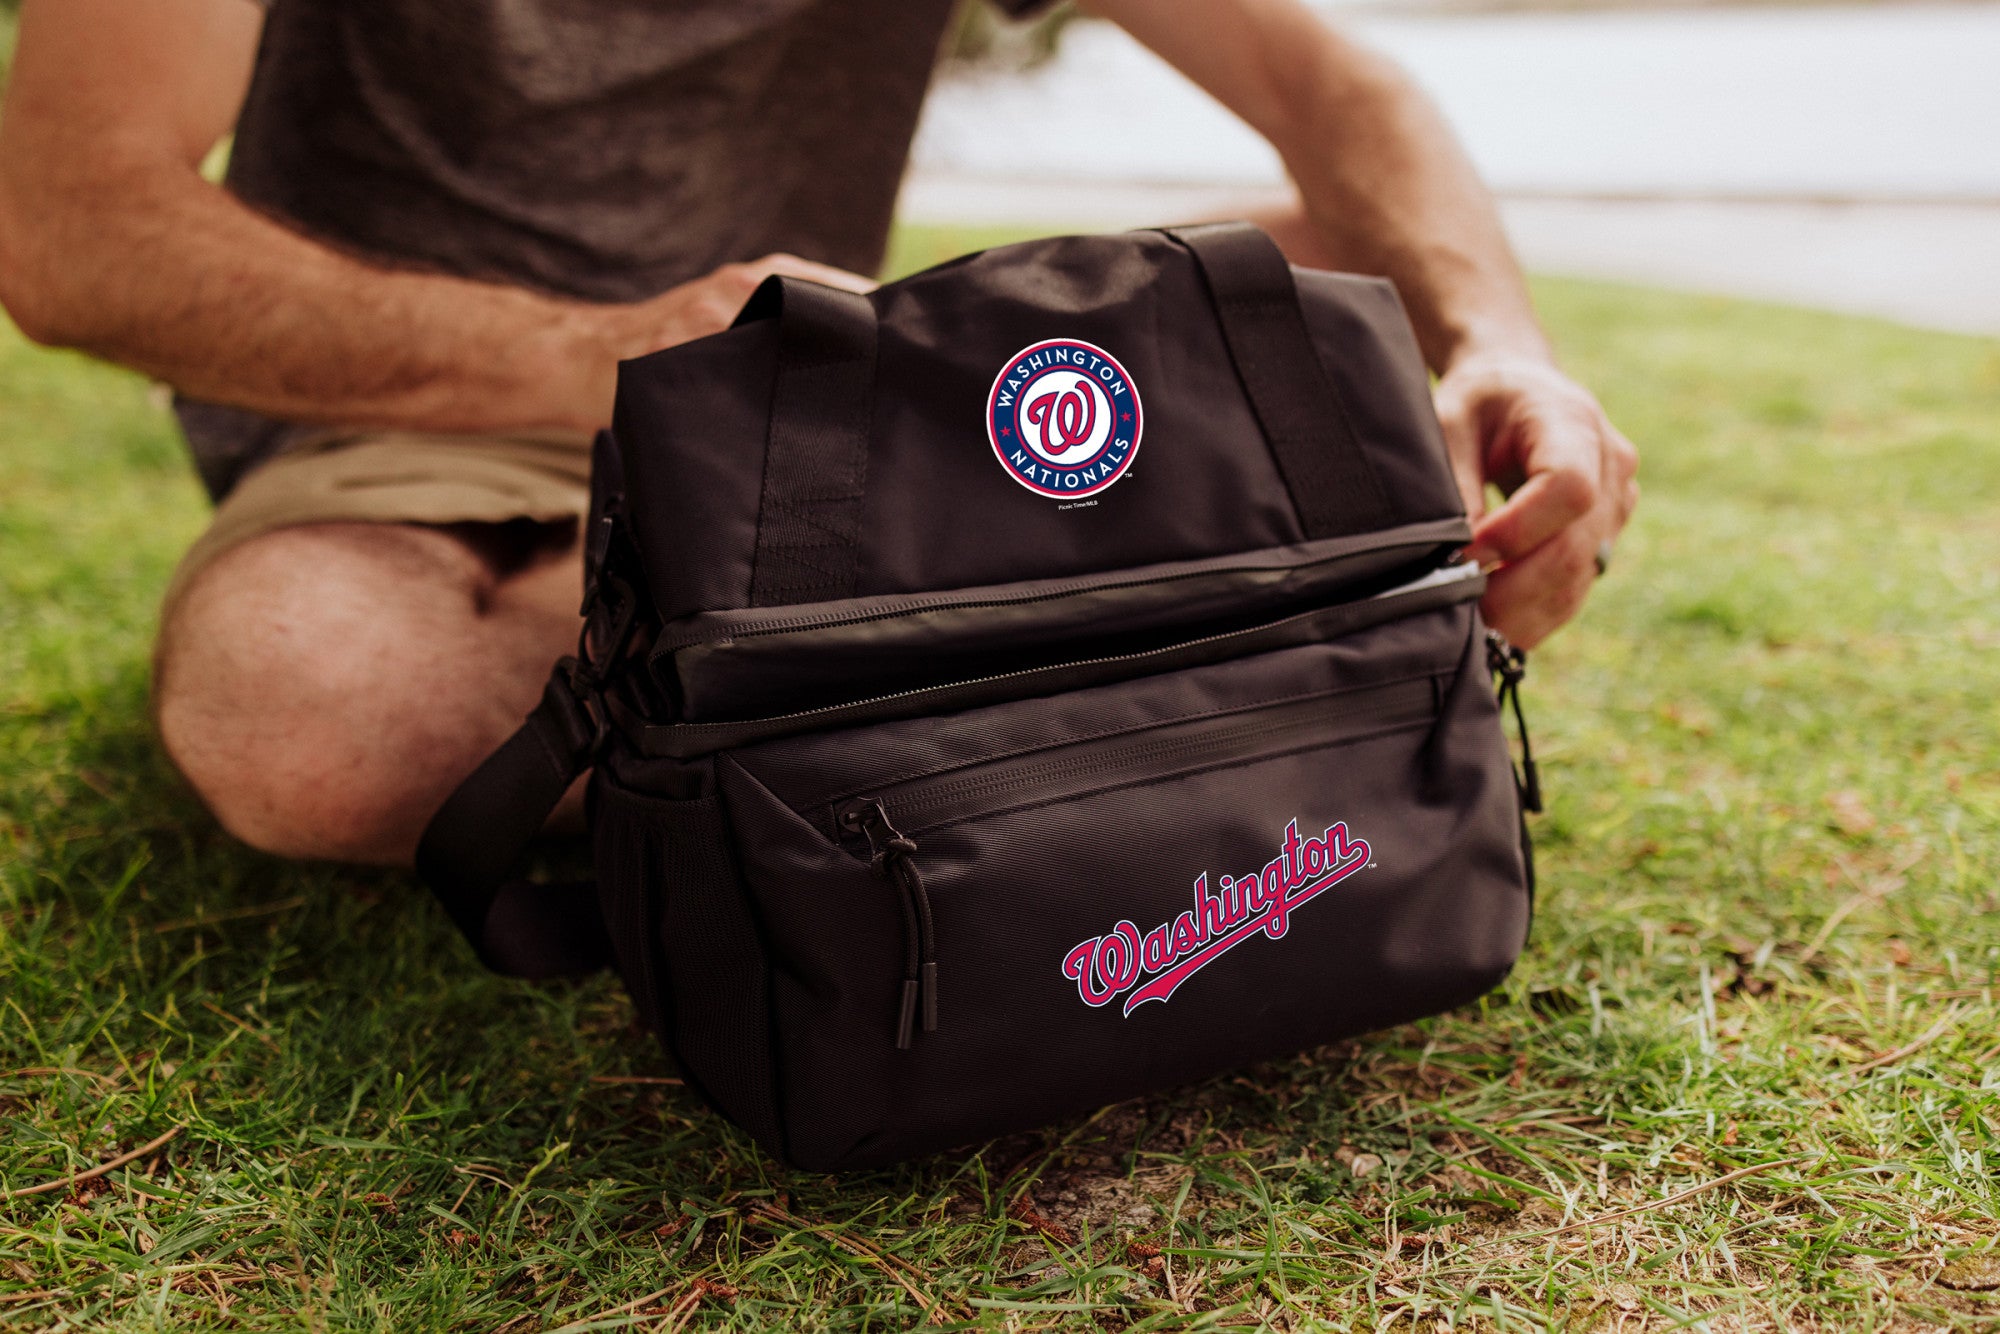 Washington Nationals - Tarana Lunch Bag Cooler with Utensils